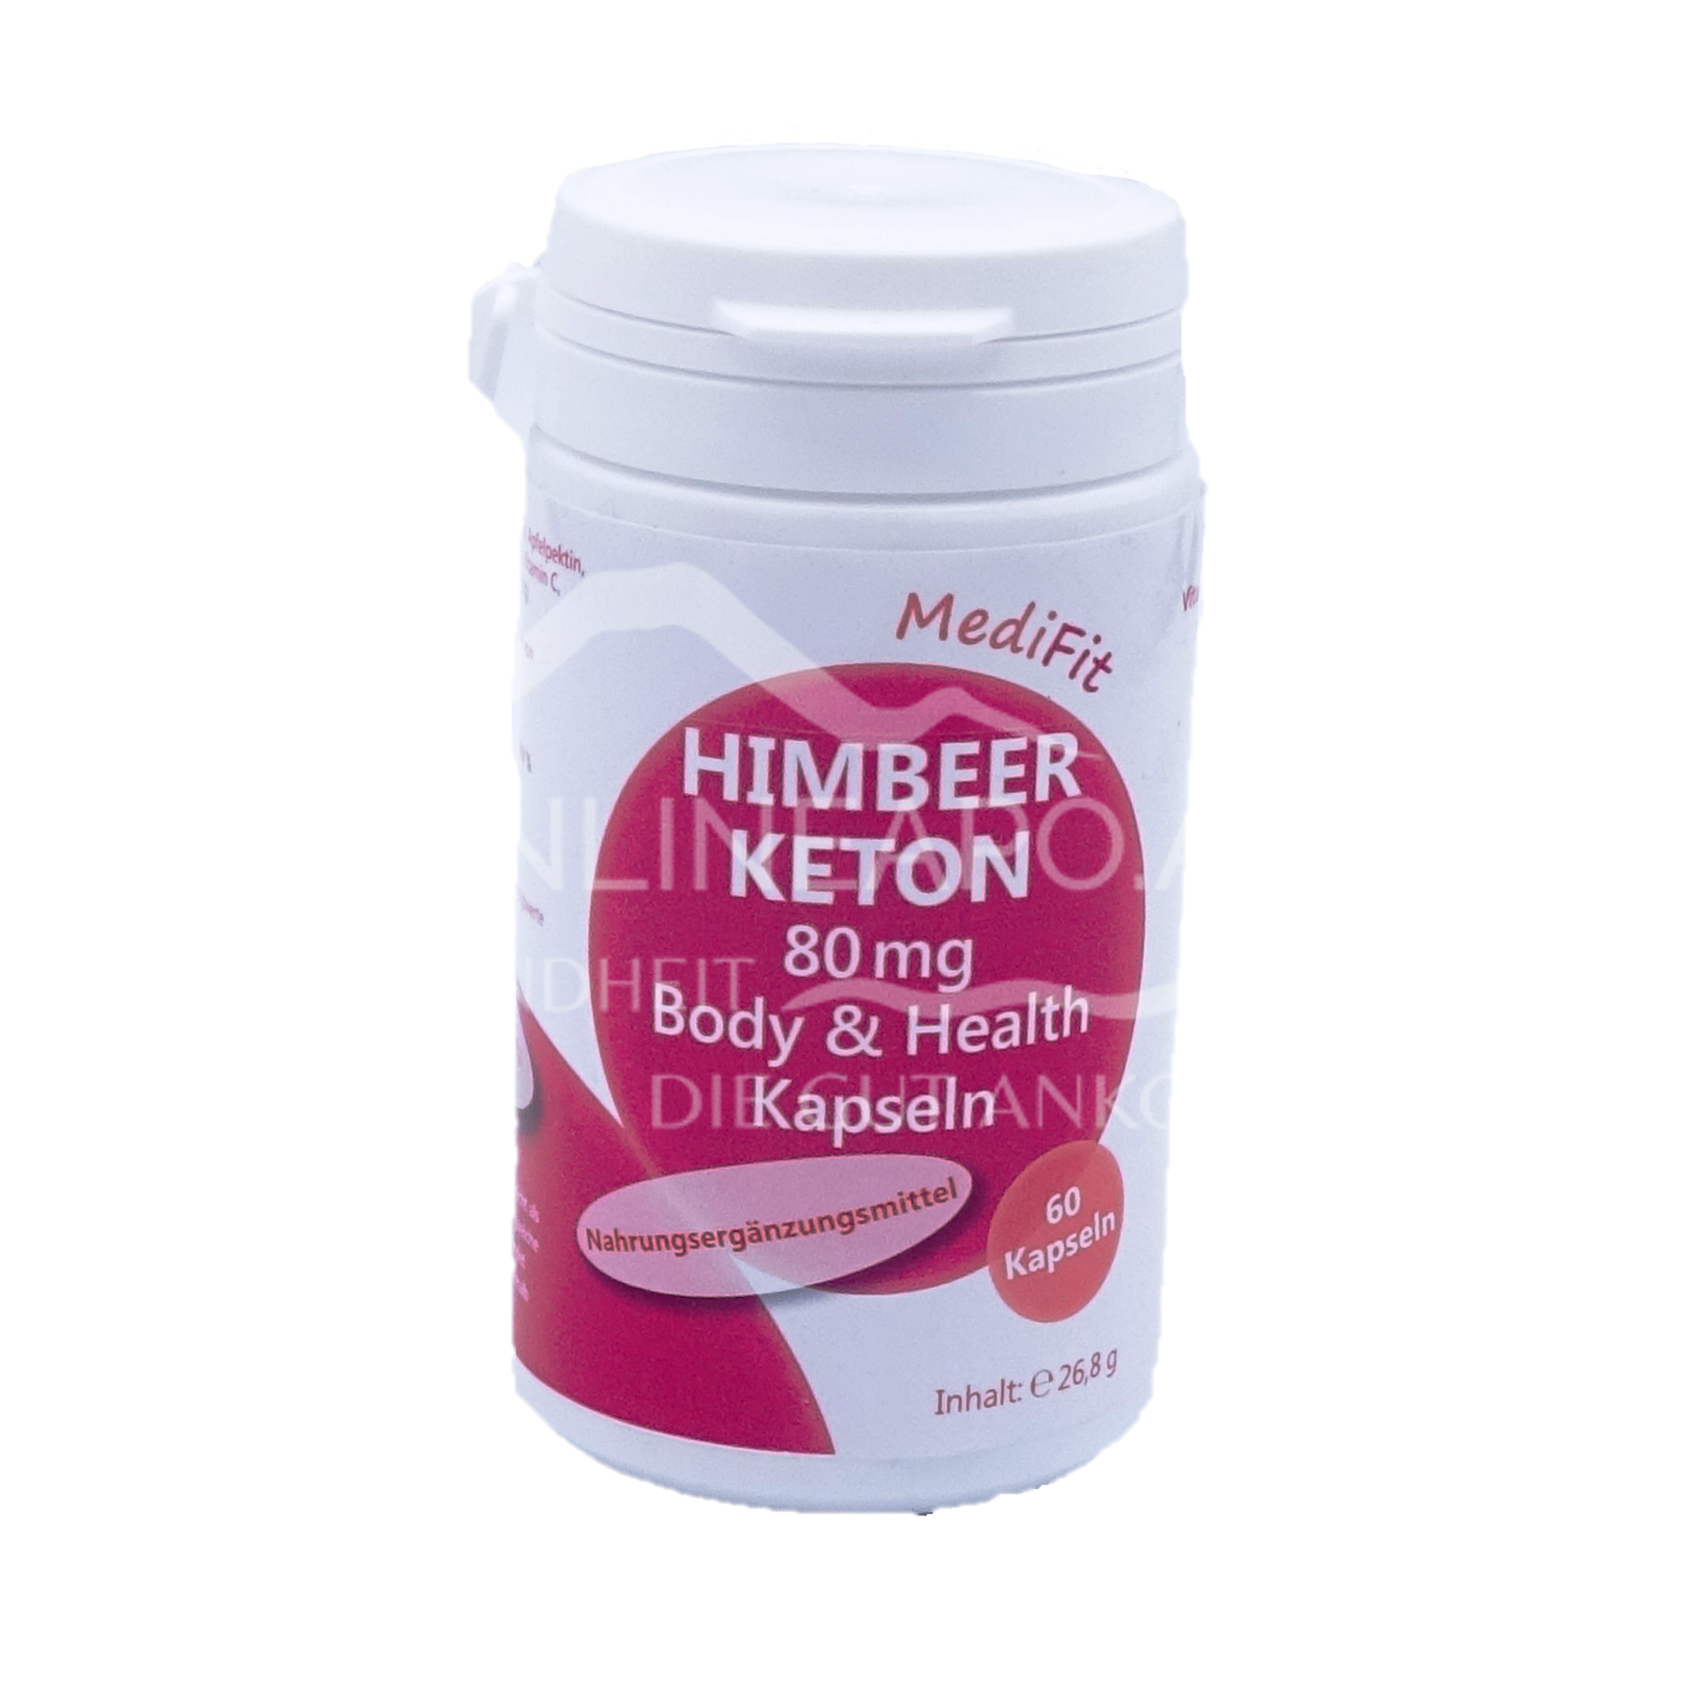 Himbeerketon 80 mg Body & Health Kapseln